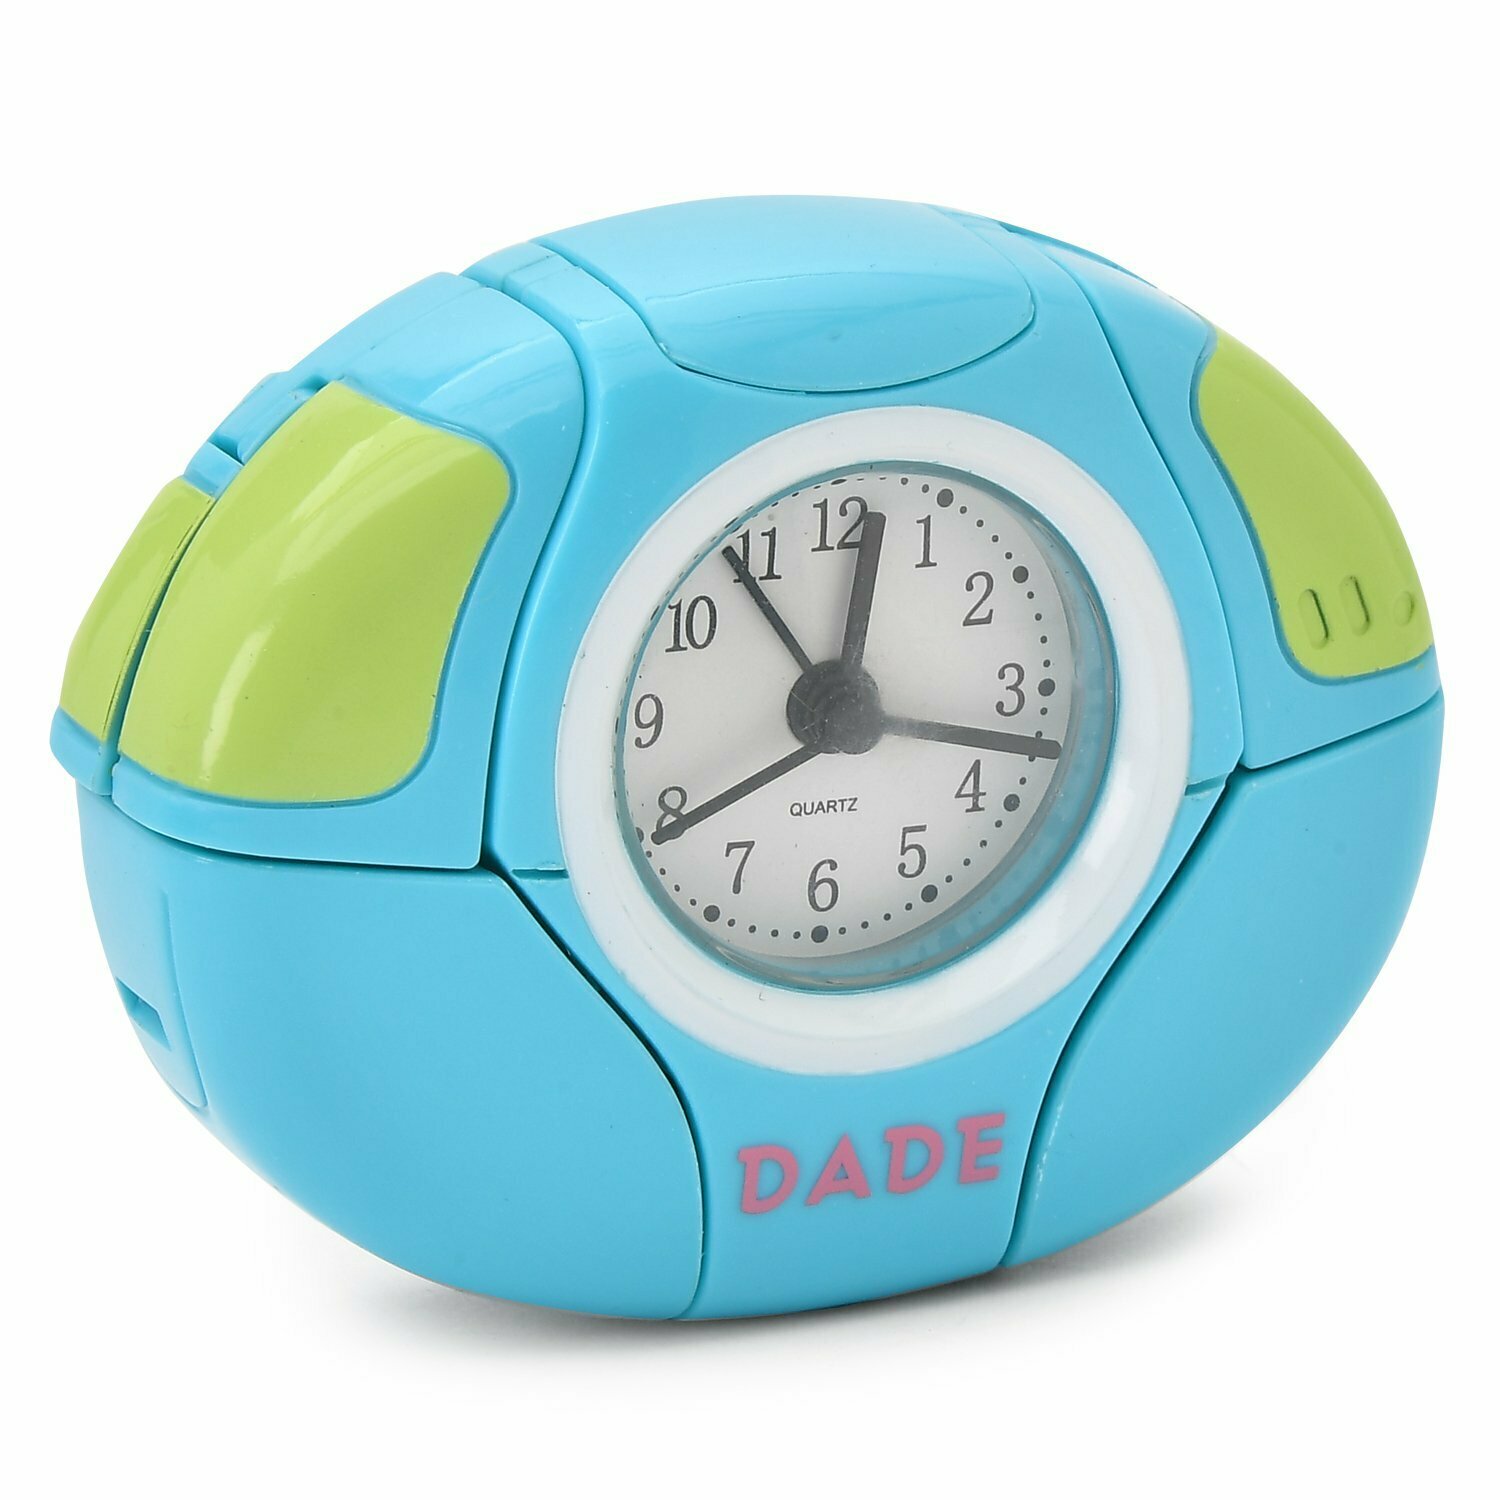 Часы-будильник DADE toys Робот YS976524 - фото 6